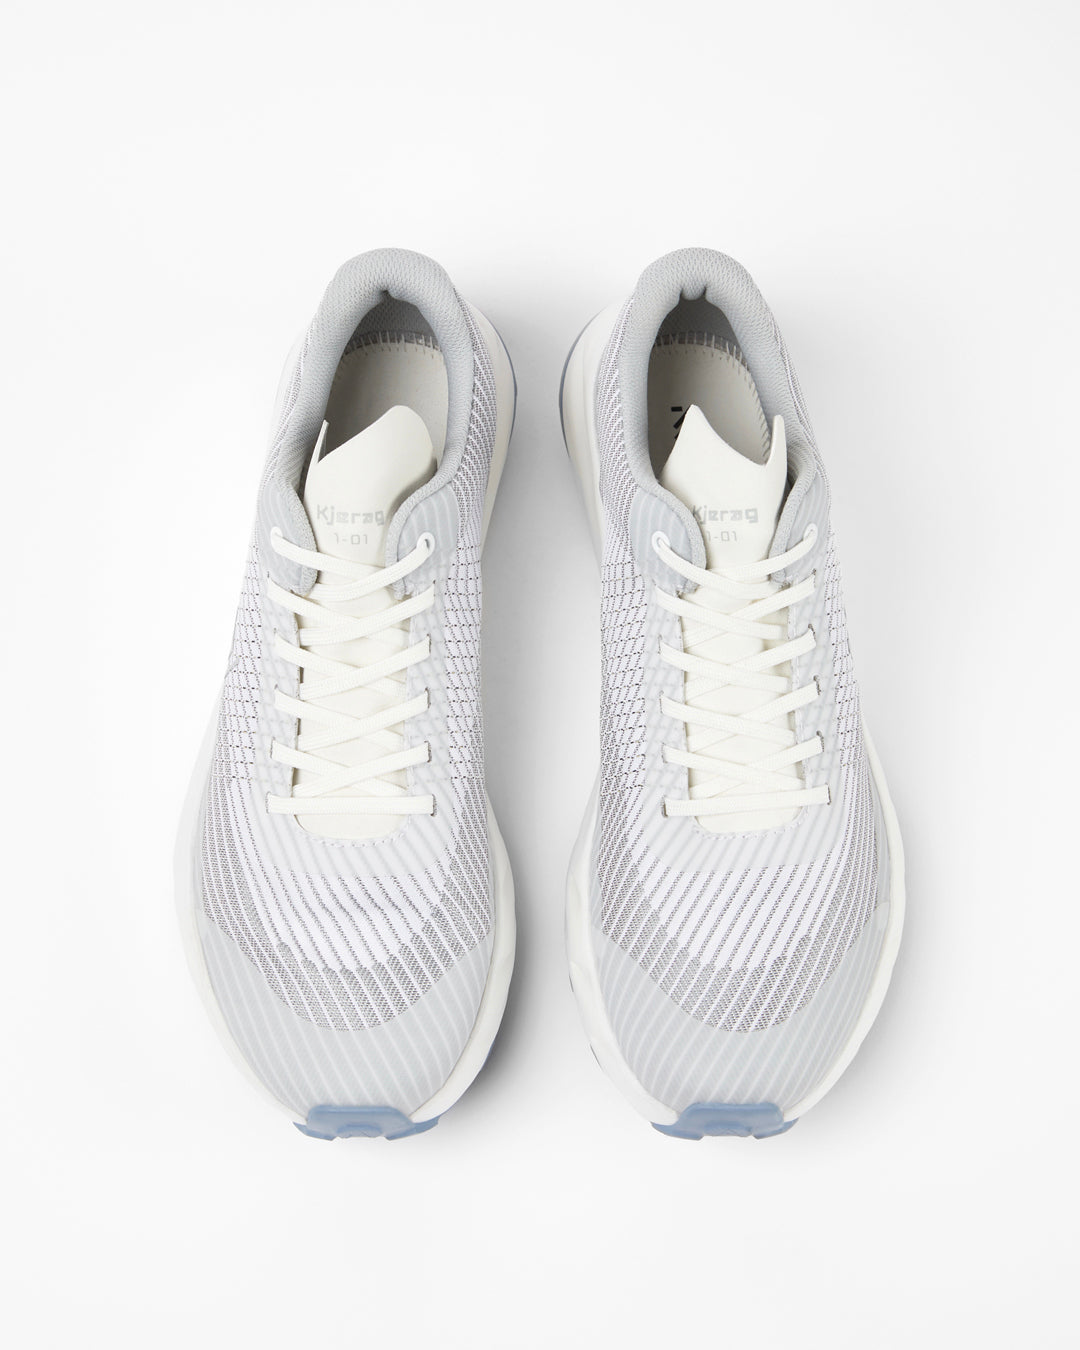 Kjerag Shoe White/Grey